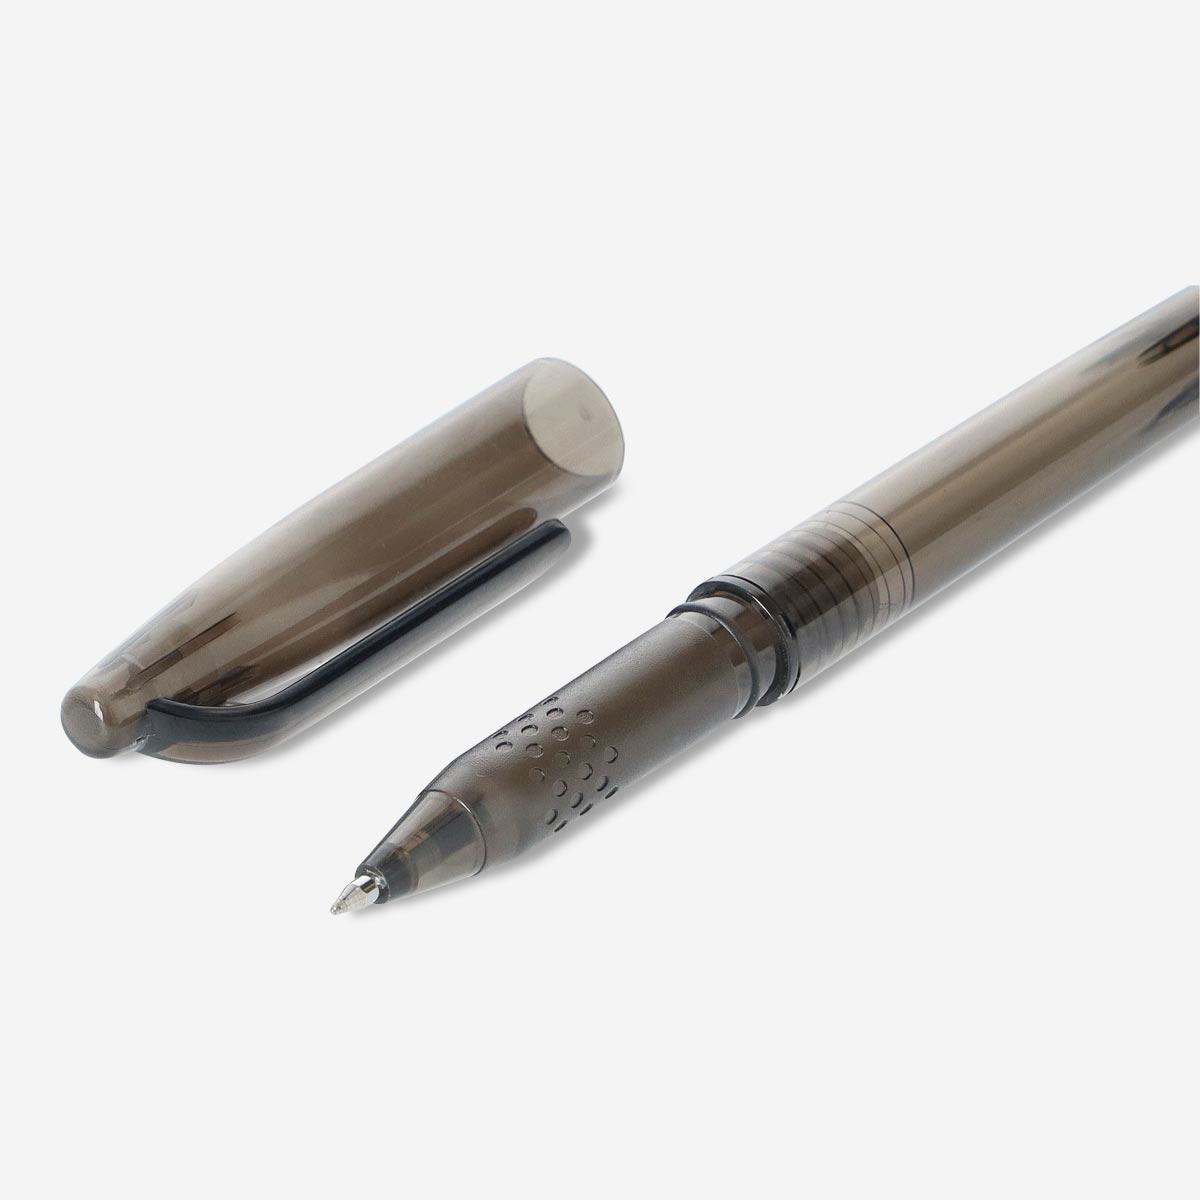 Black erasable pens. 5 pcs